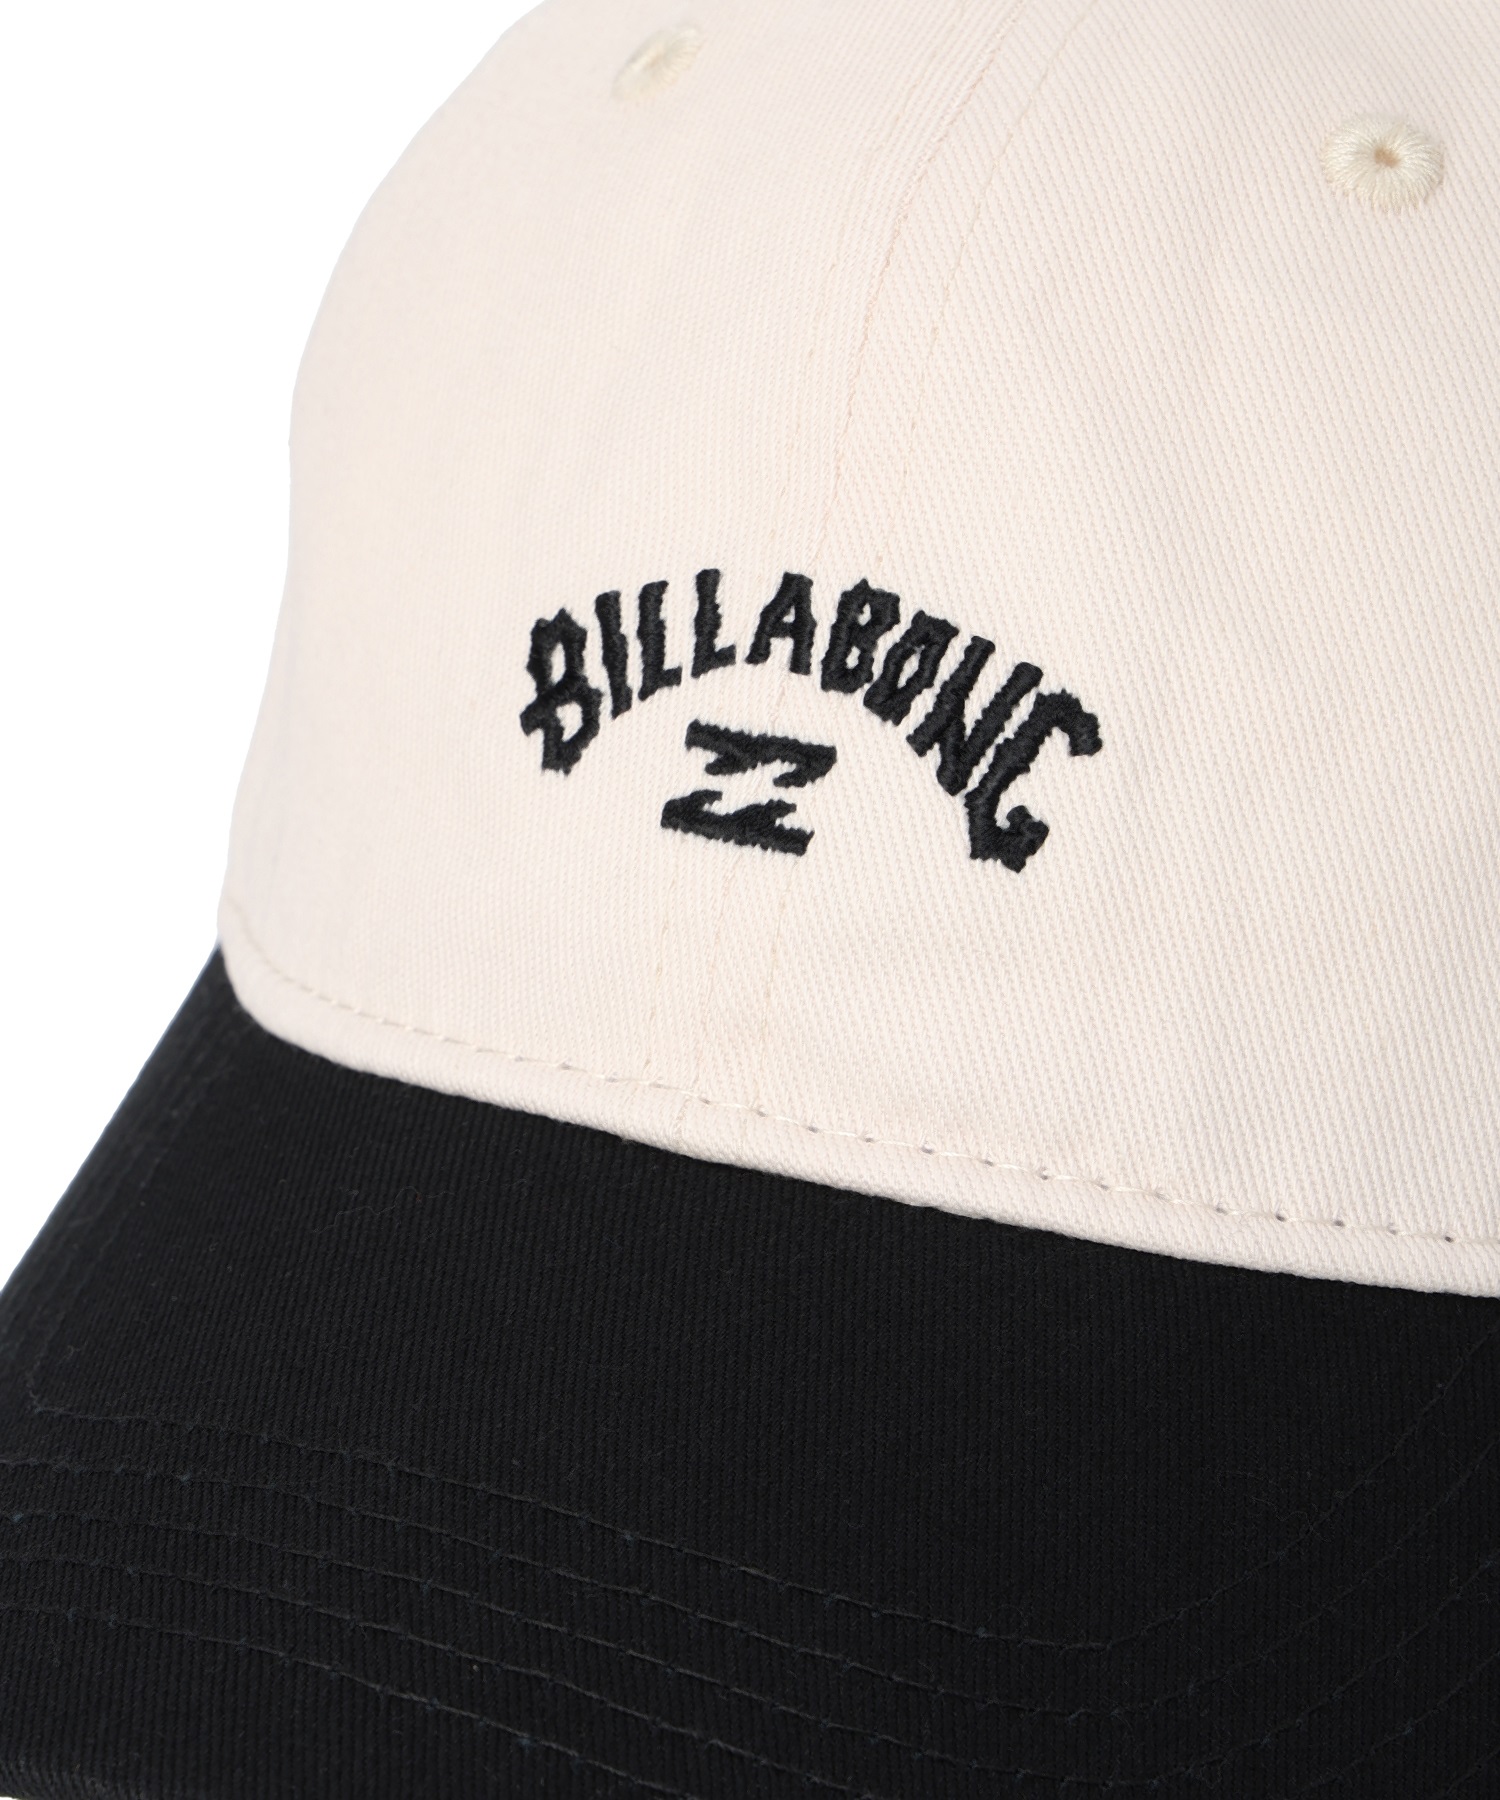 BILLABONG ビラボン CAP  BE015-991 キッズ キャップ(BSD-F)